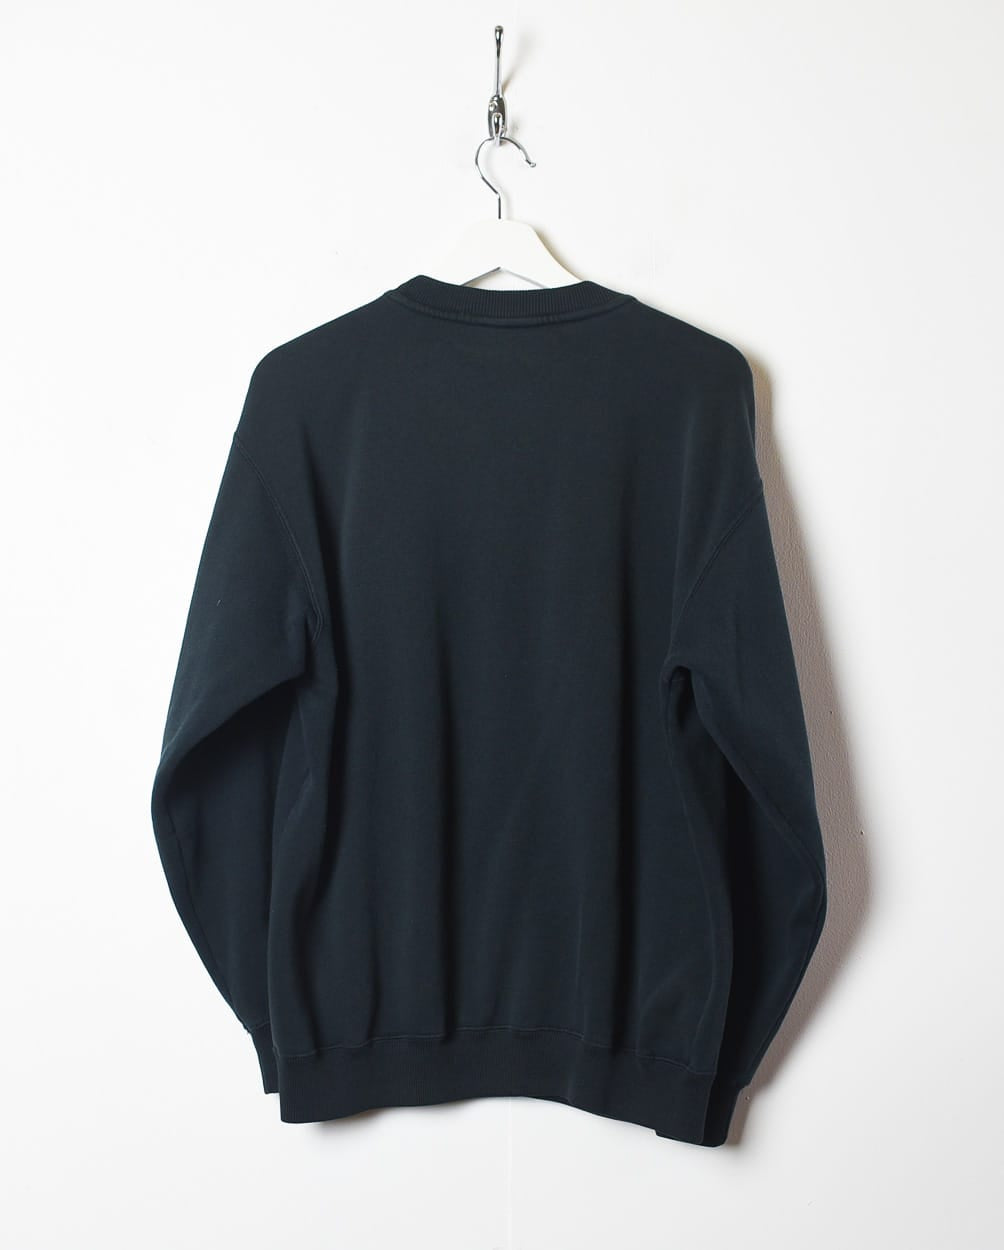 Black Reebok Sweatshirt - Medium